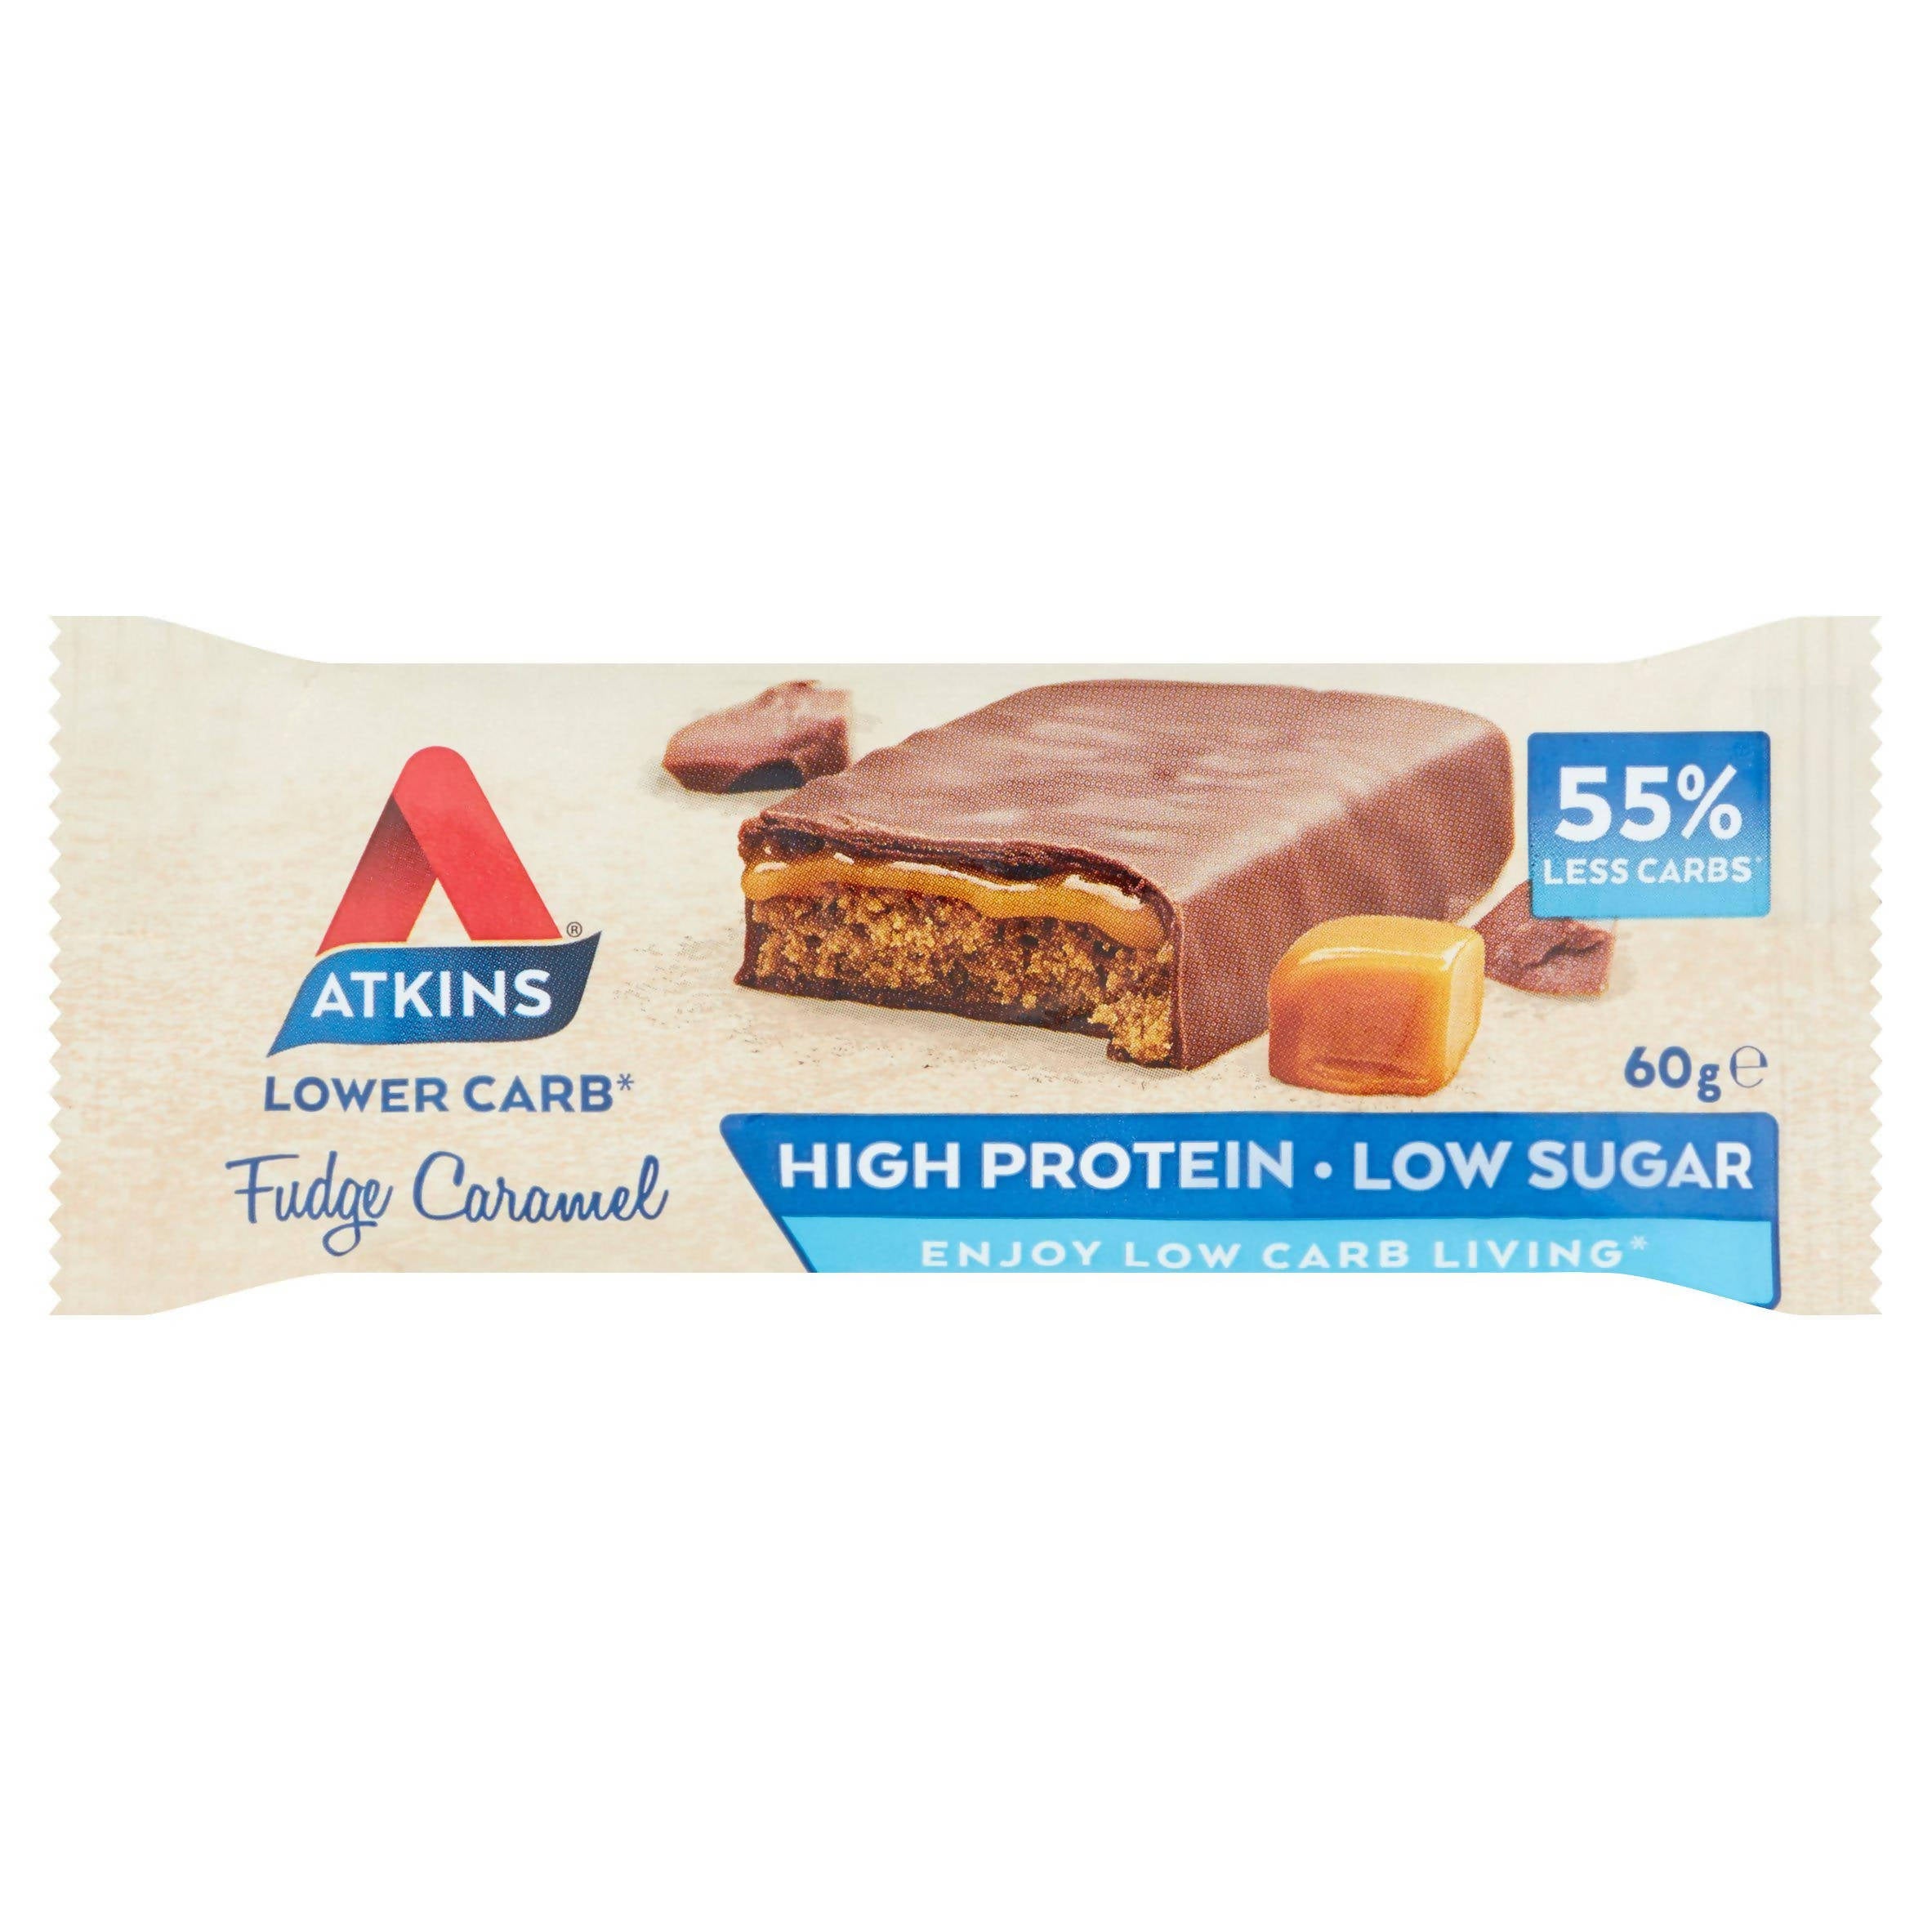 Atkins Fudge Caramel bar (60g) Keto, Low Carb, Low Sugar, High Protein